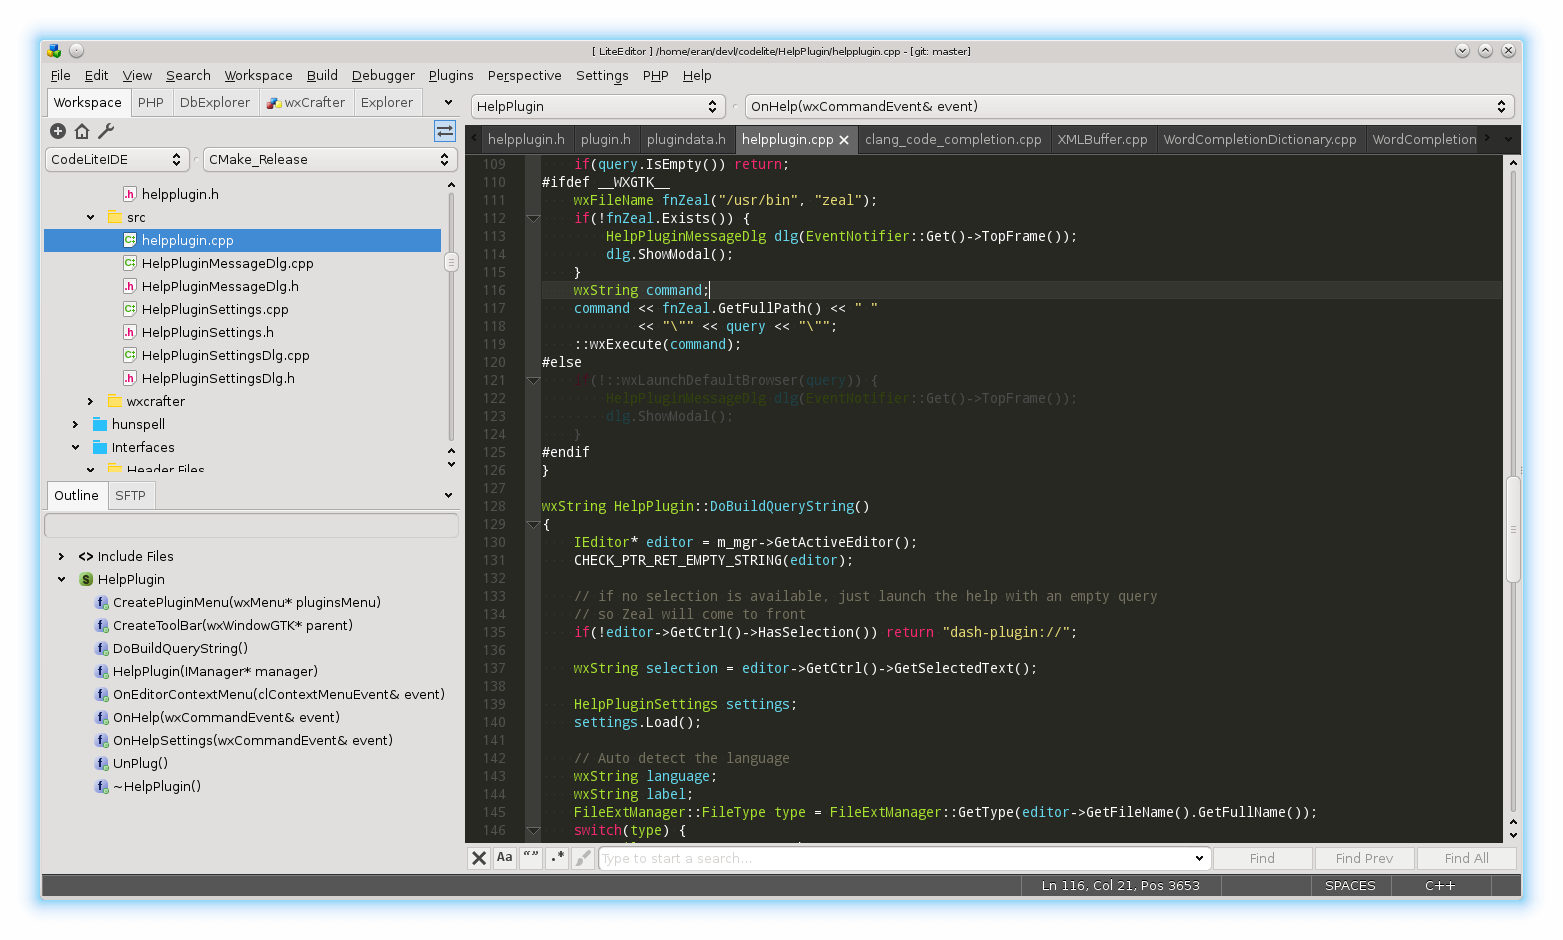 More gnu development software for os2 2.0 c/c++ development.